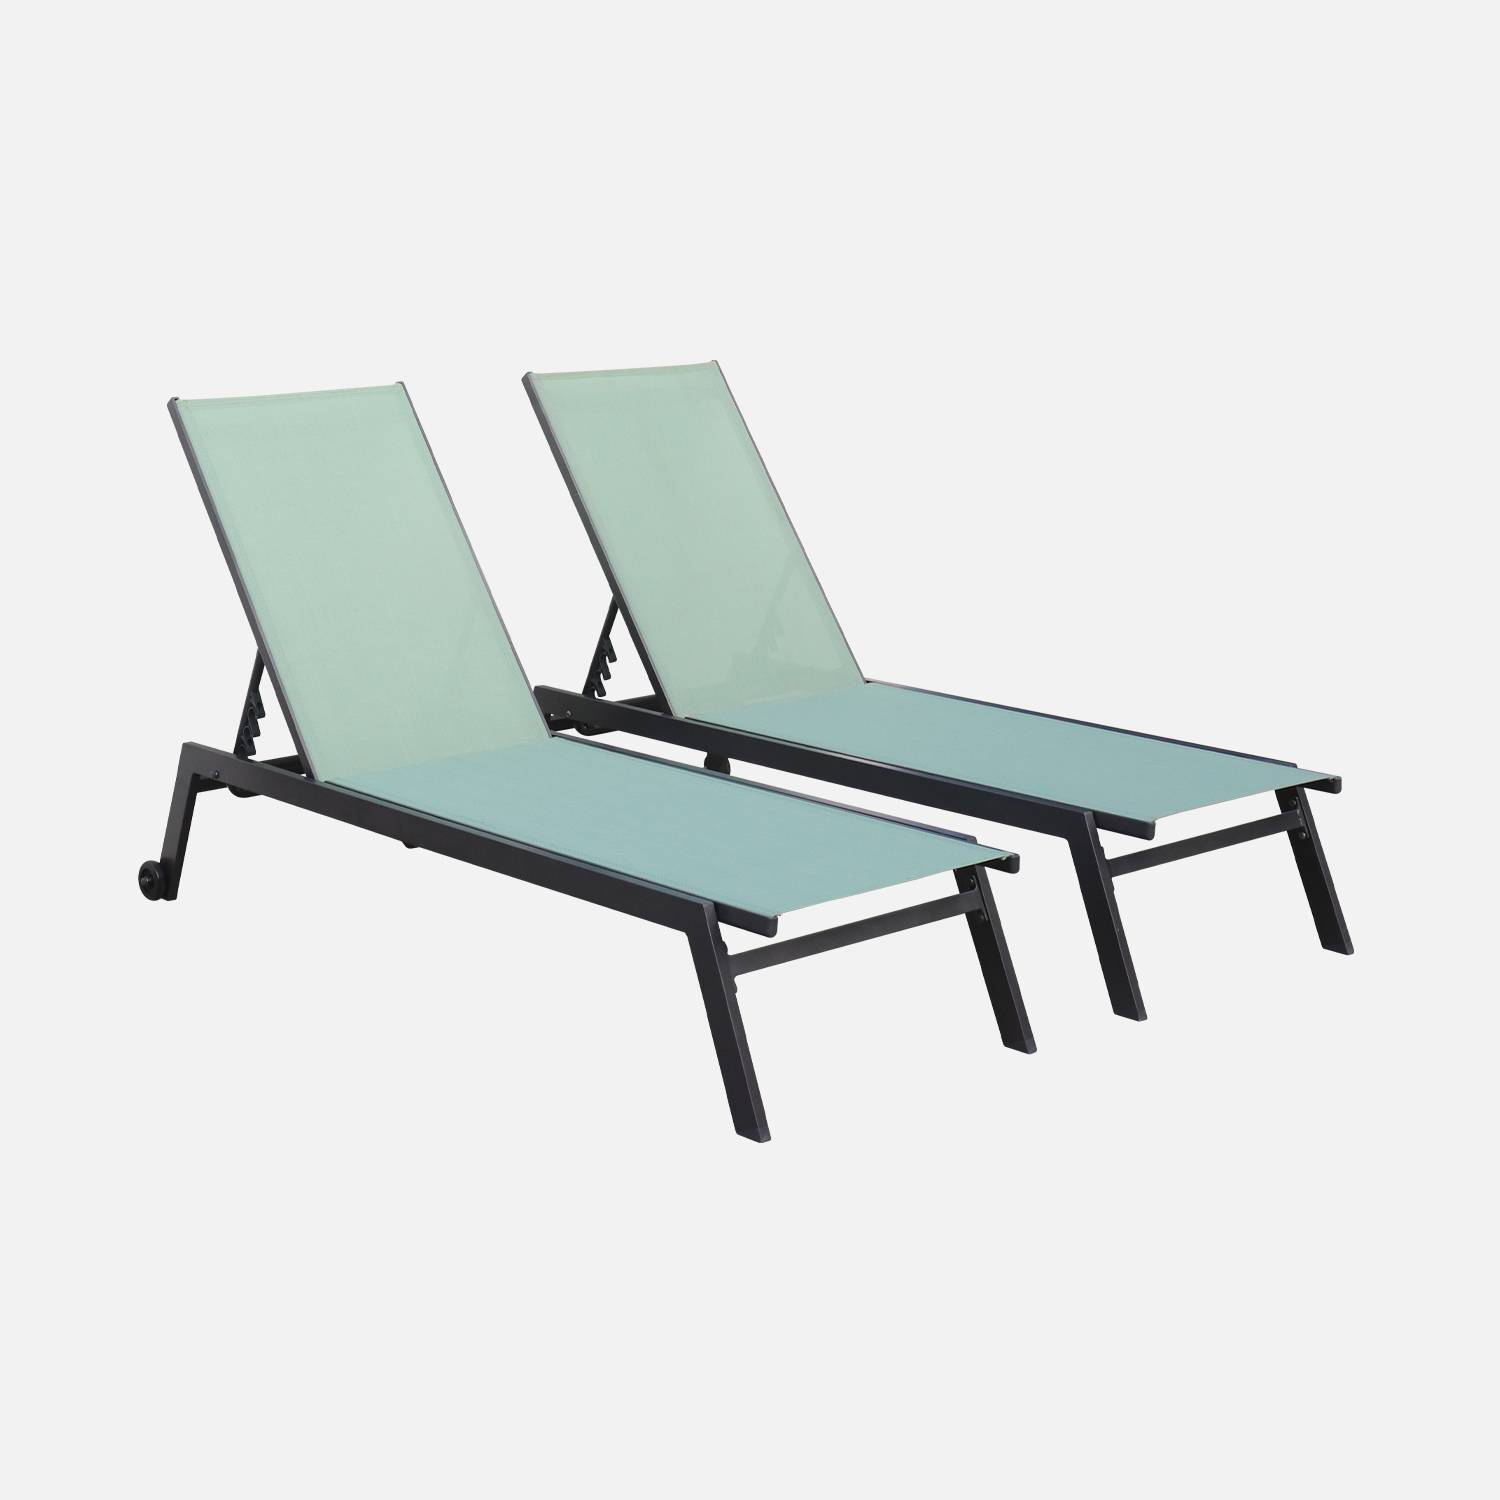 Pair of multi-position aluminium sun loungers with wheels - Elsa - Anthracite frame, Sage Green textilene fabric Photo2